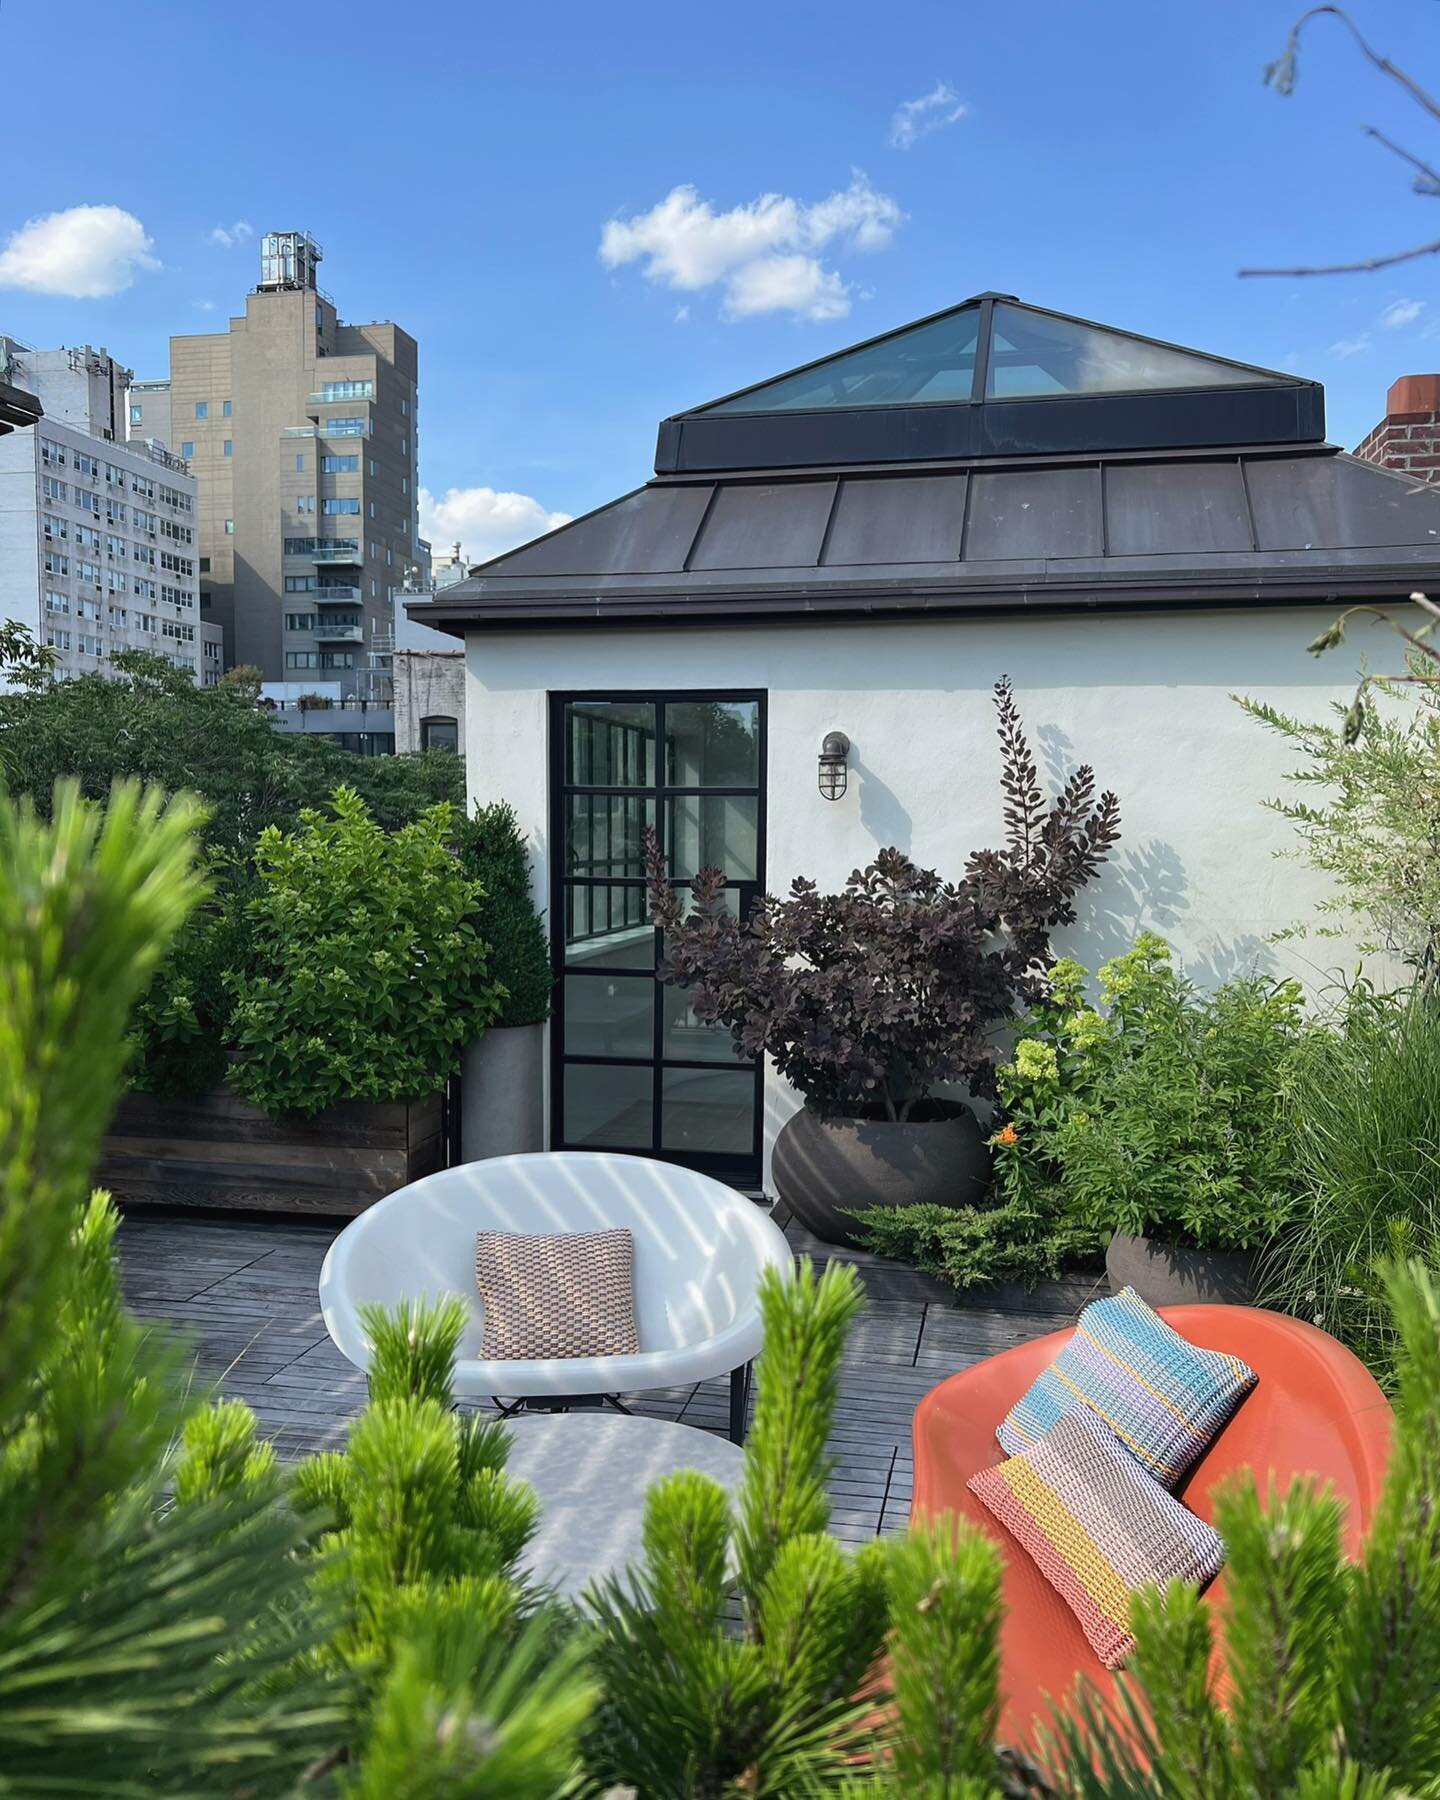 Dreaming of summer&hellip;
.
Plantscape/Pottery @dimasterystudio 
Architecture/Furniture @studio_db 
.
.
.
.
.
.
.
#dimasterystudio #urbangarden #citygarden #gardendesign #sodomino #landscapedesign #plantingdesign #manhattanterrace #roofterrace #manh